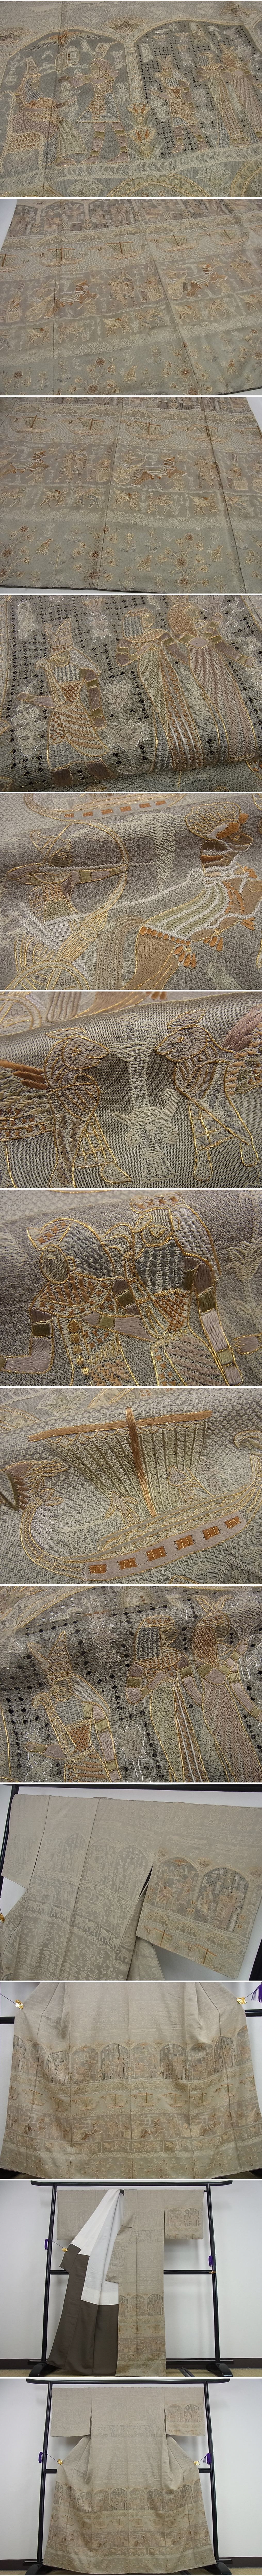 独特な店訪問着 スワトウ刺繍 総刺繍 古代人物壁画文様 金糸 m-2s489